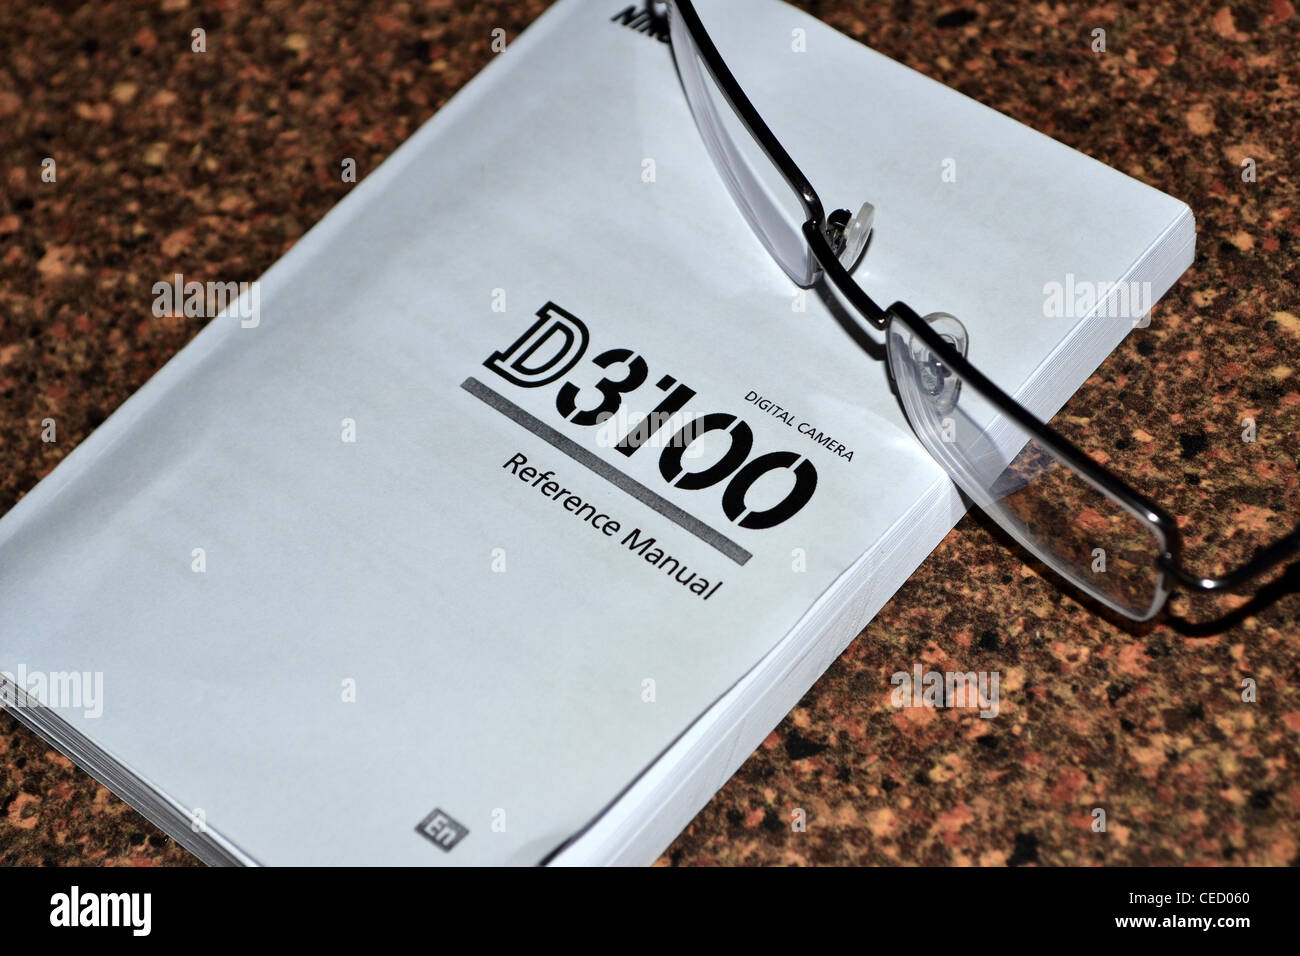 nikon D3100 manual with glasses Stock Photo